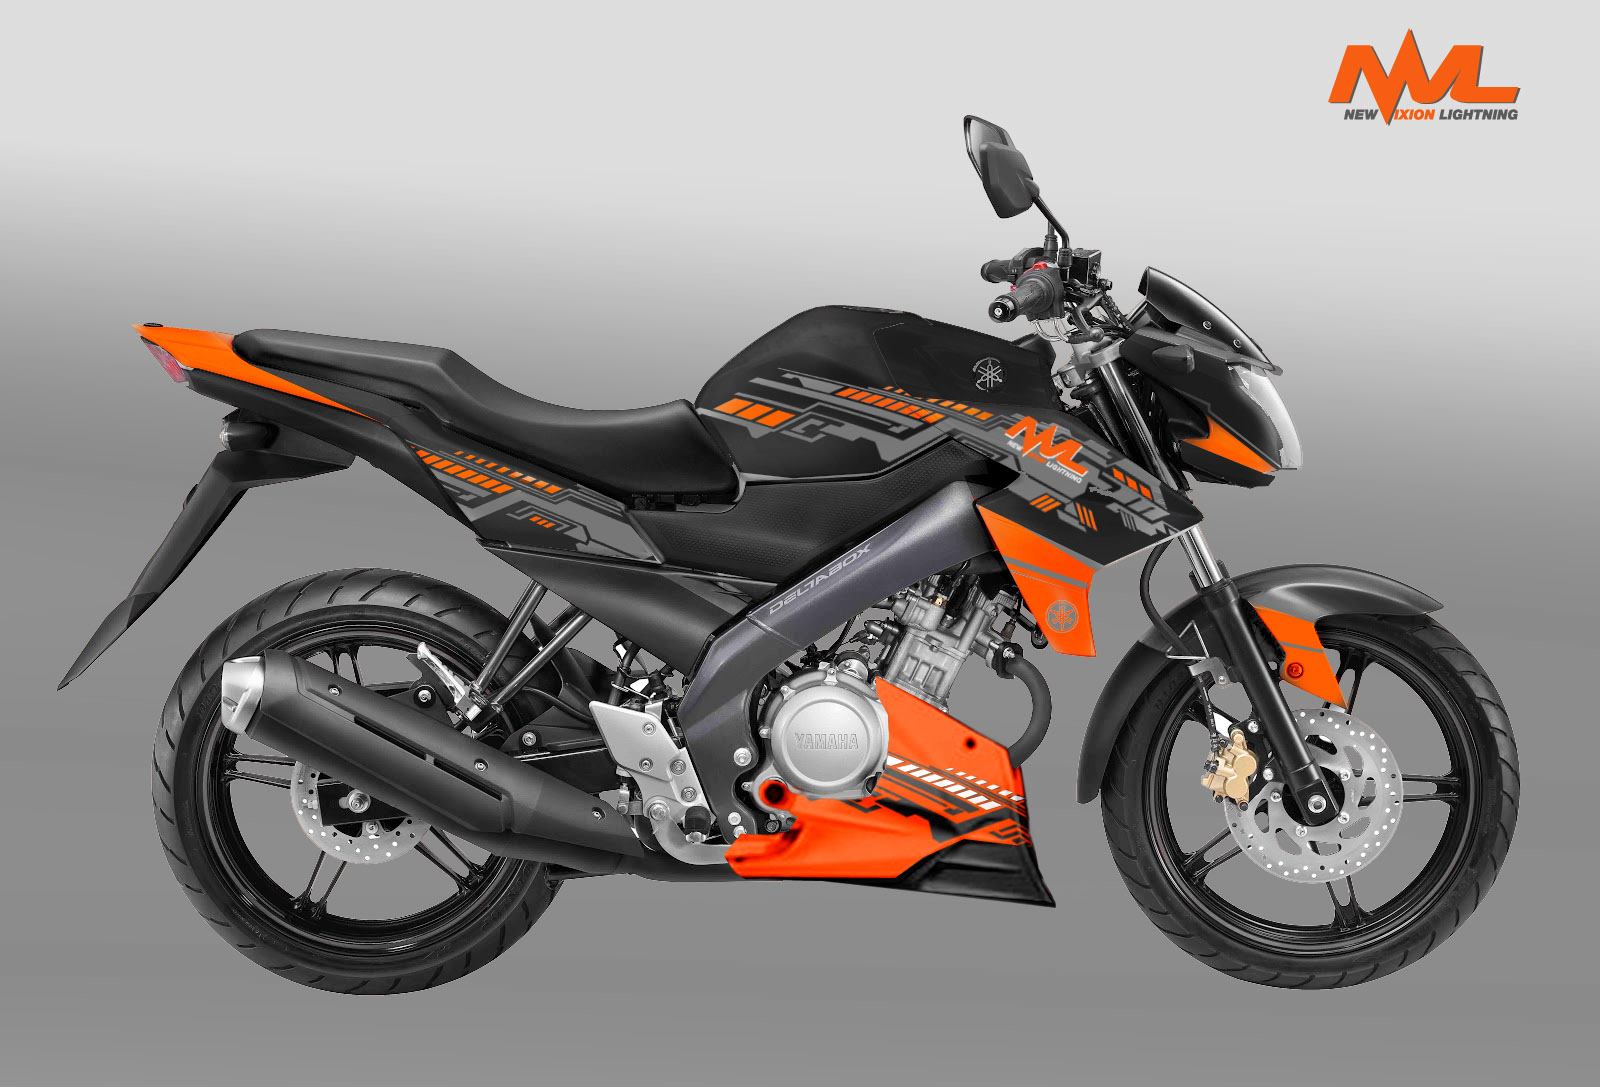 99 Modifikasi Motor Yamaha New Vixion 2013 Terlengkap Kinyis Motor